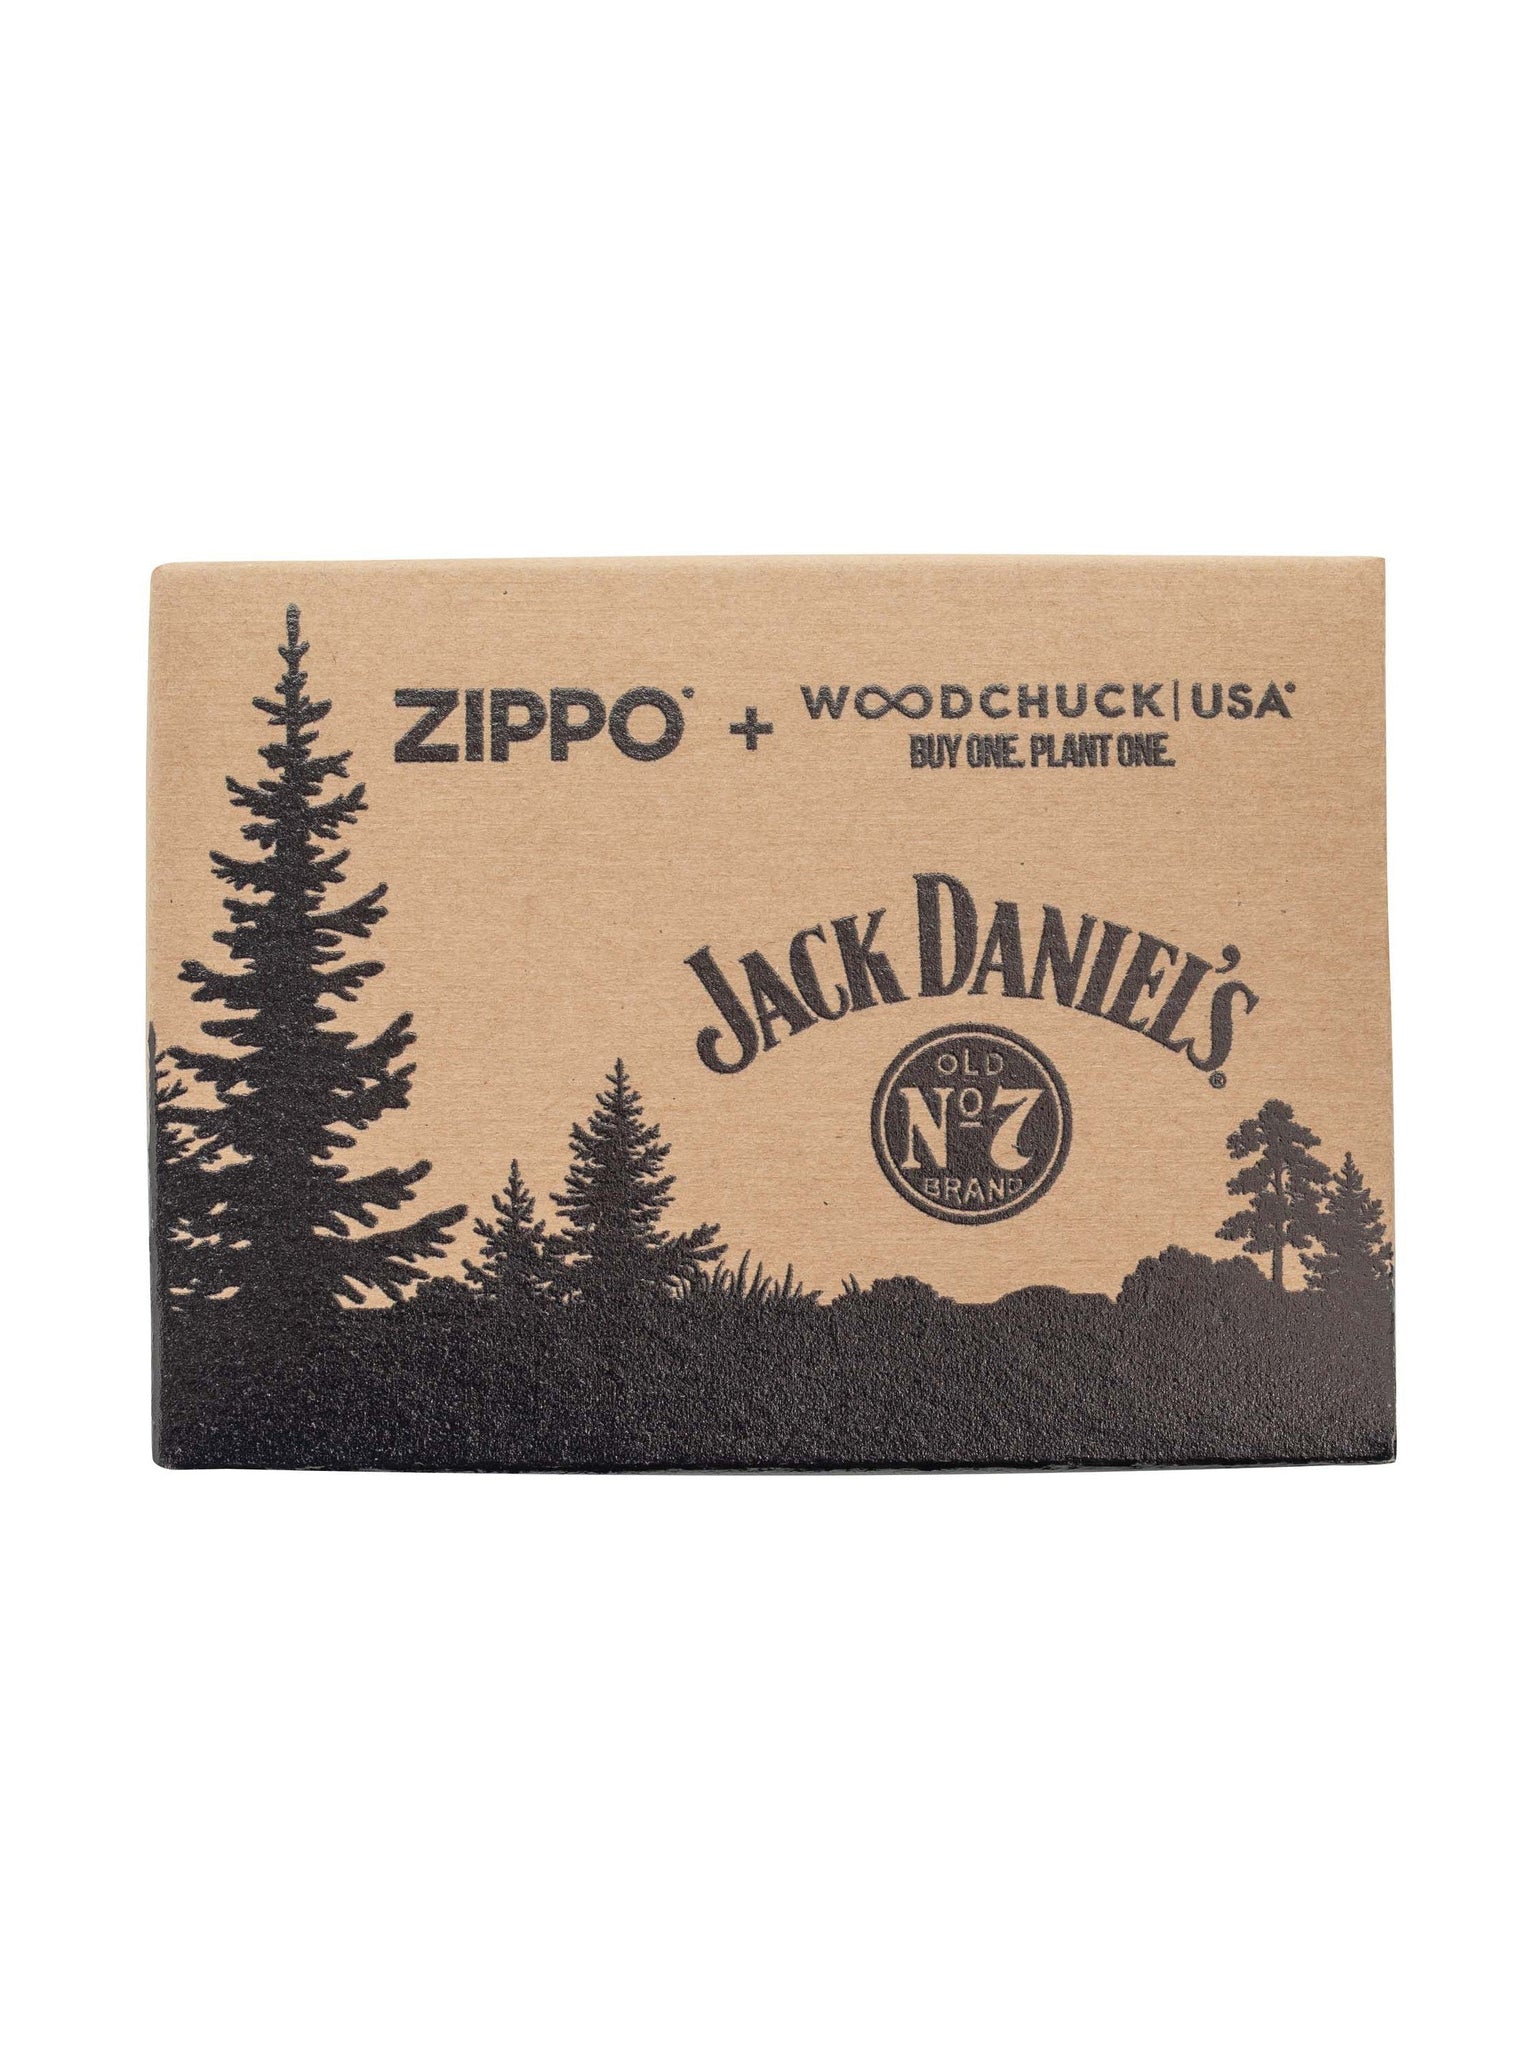 Zippo Lighter: Woodchuck Jack Daniel's - Brushed Chrome 48392